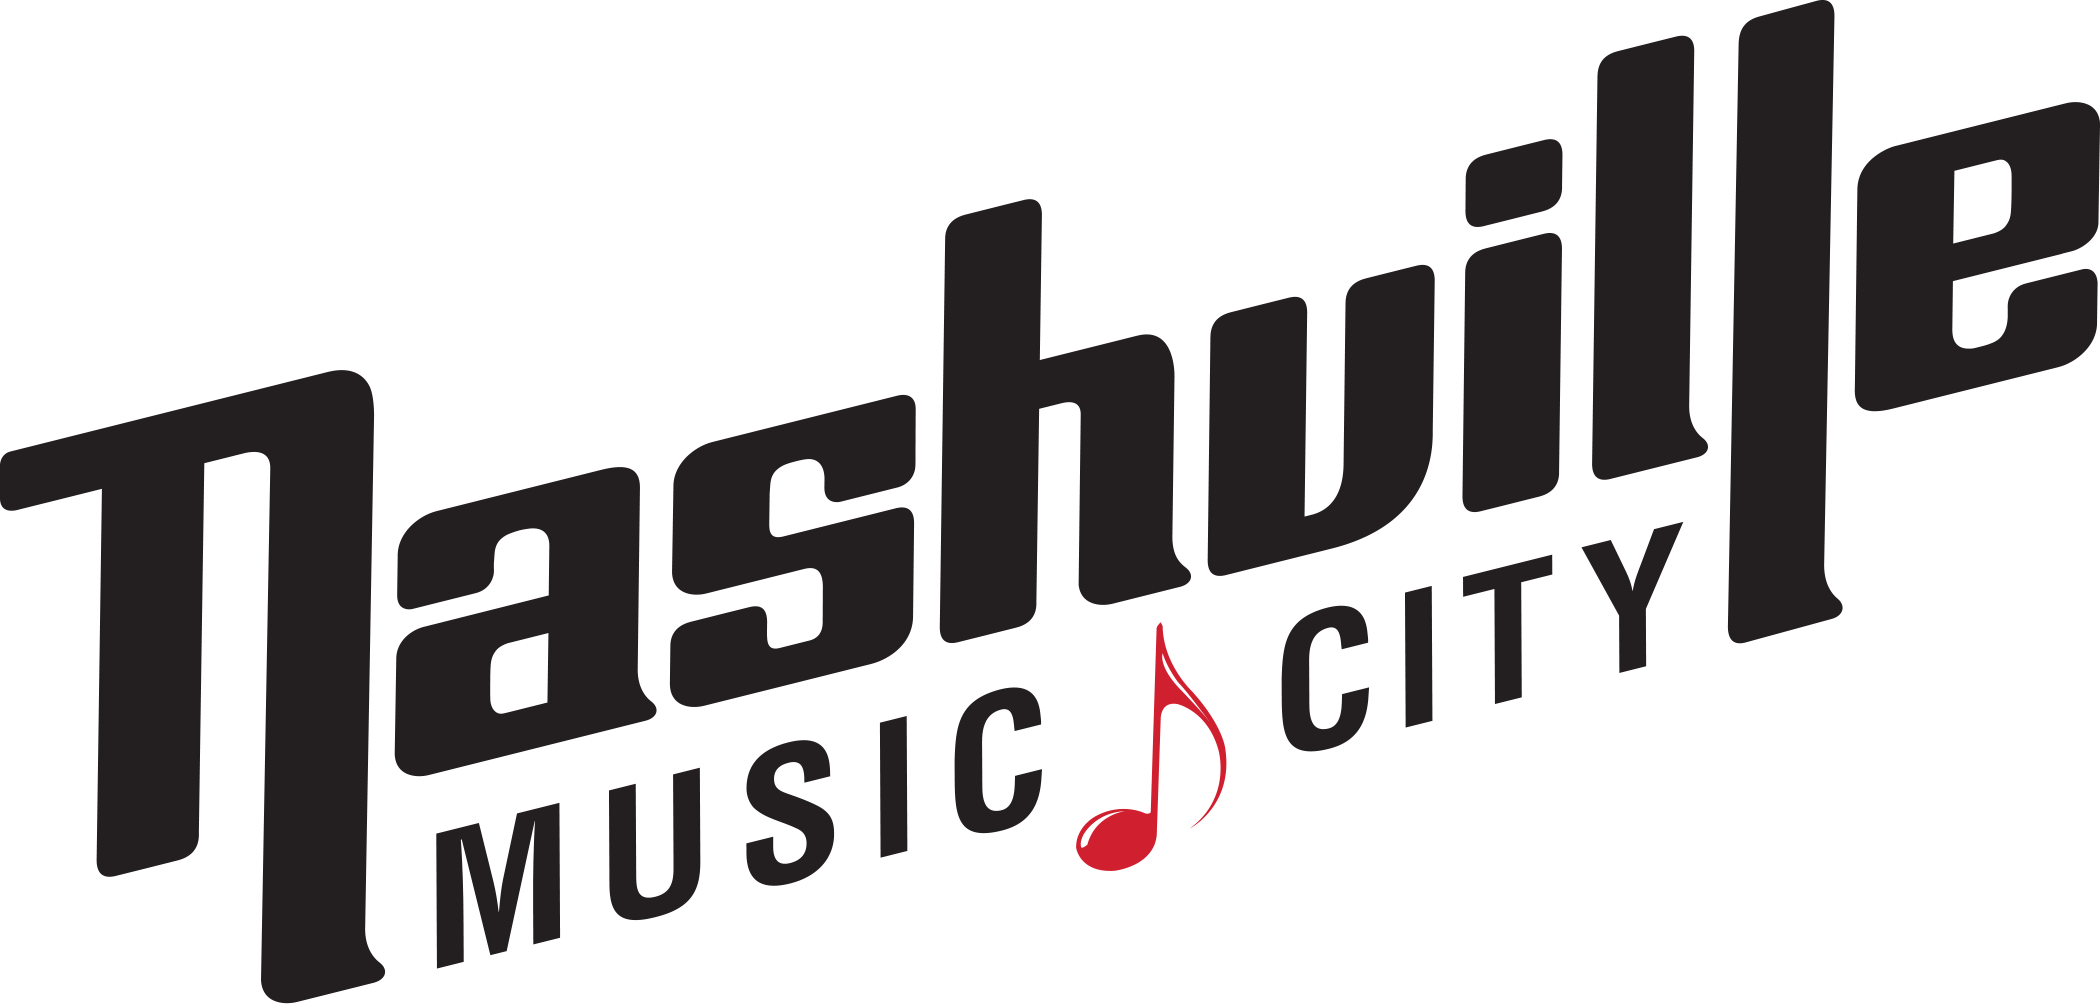 Nashville music city logo